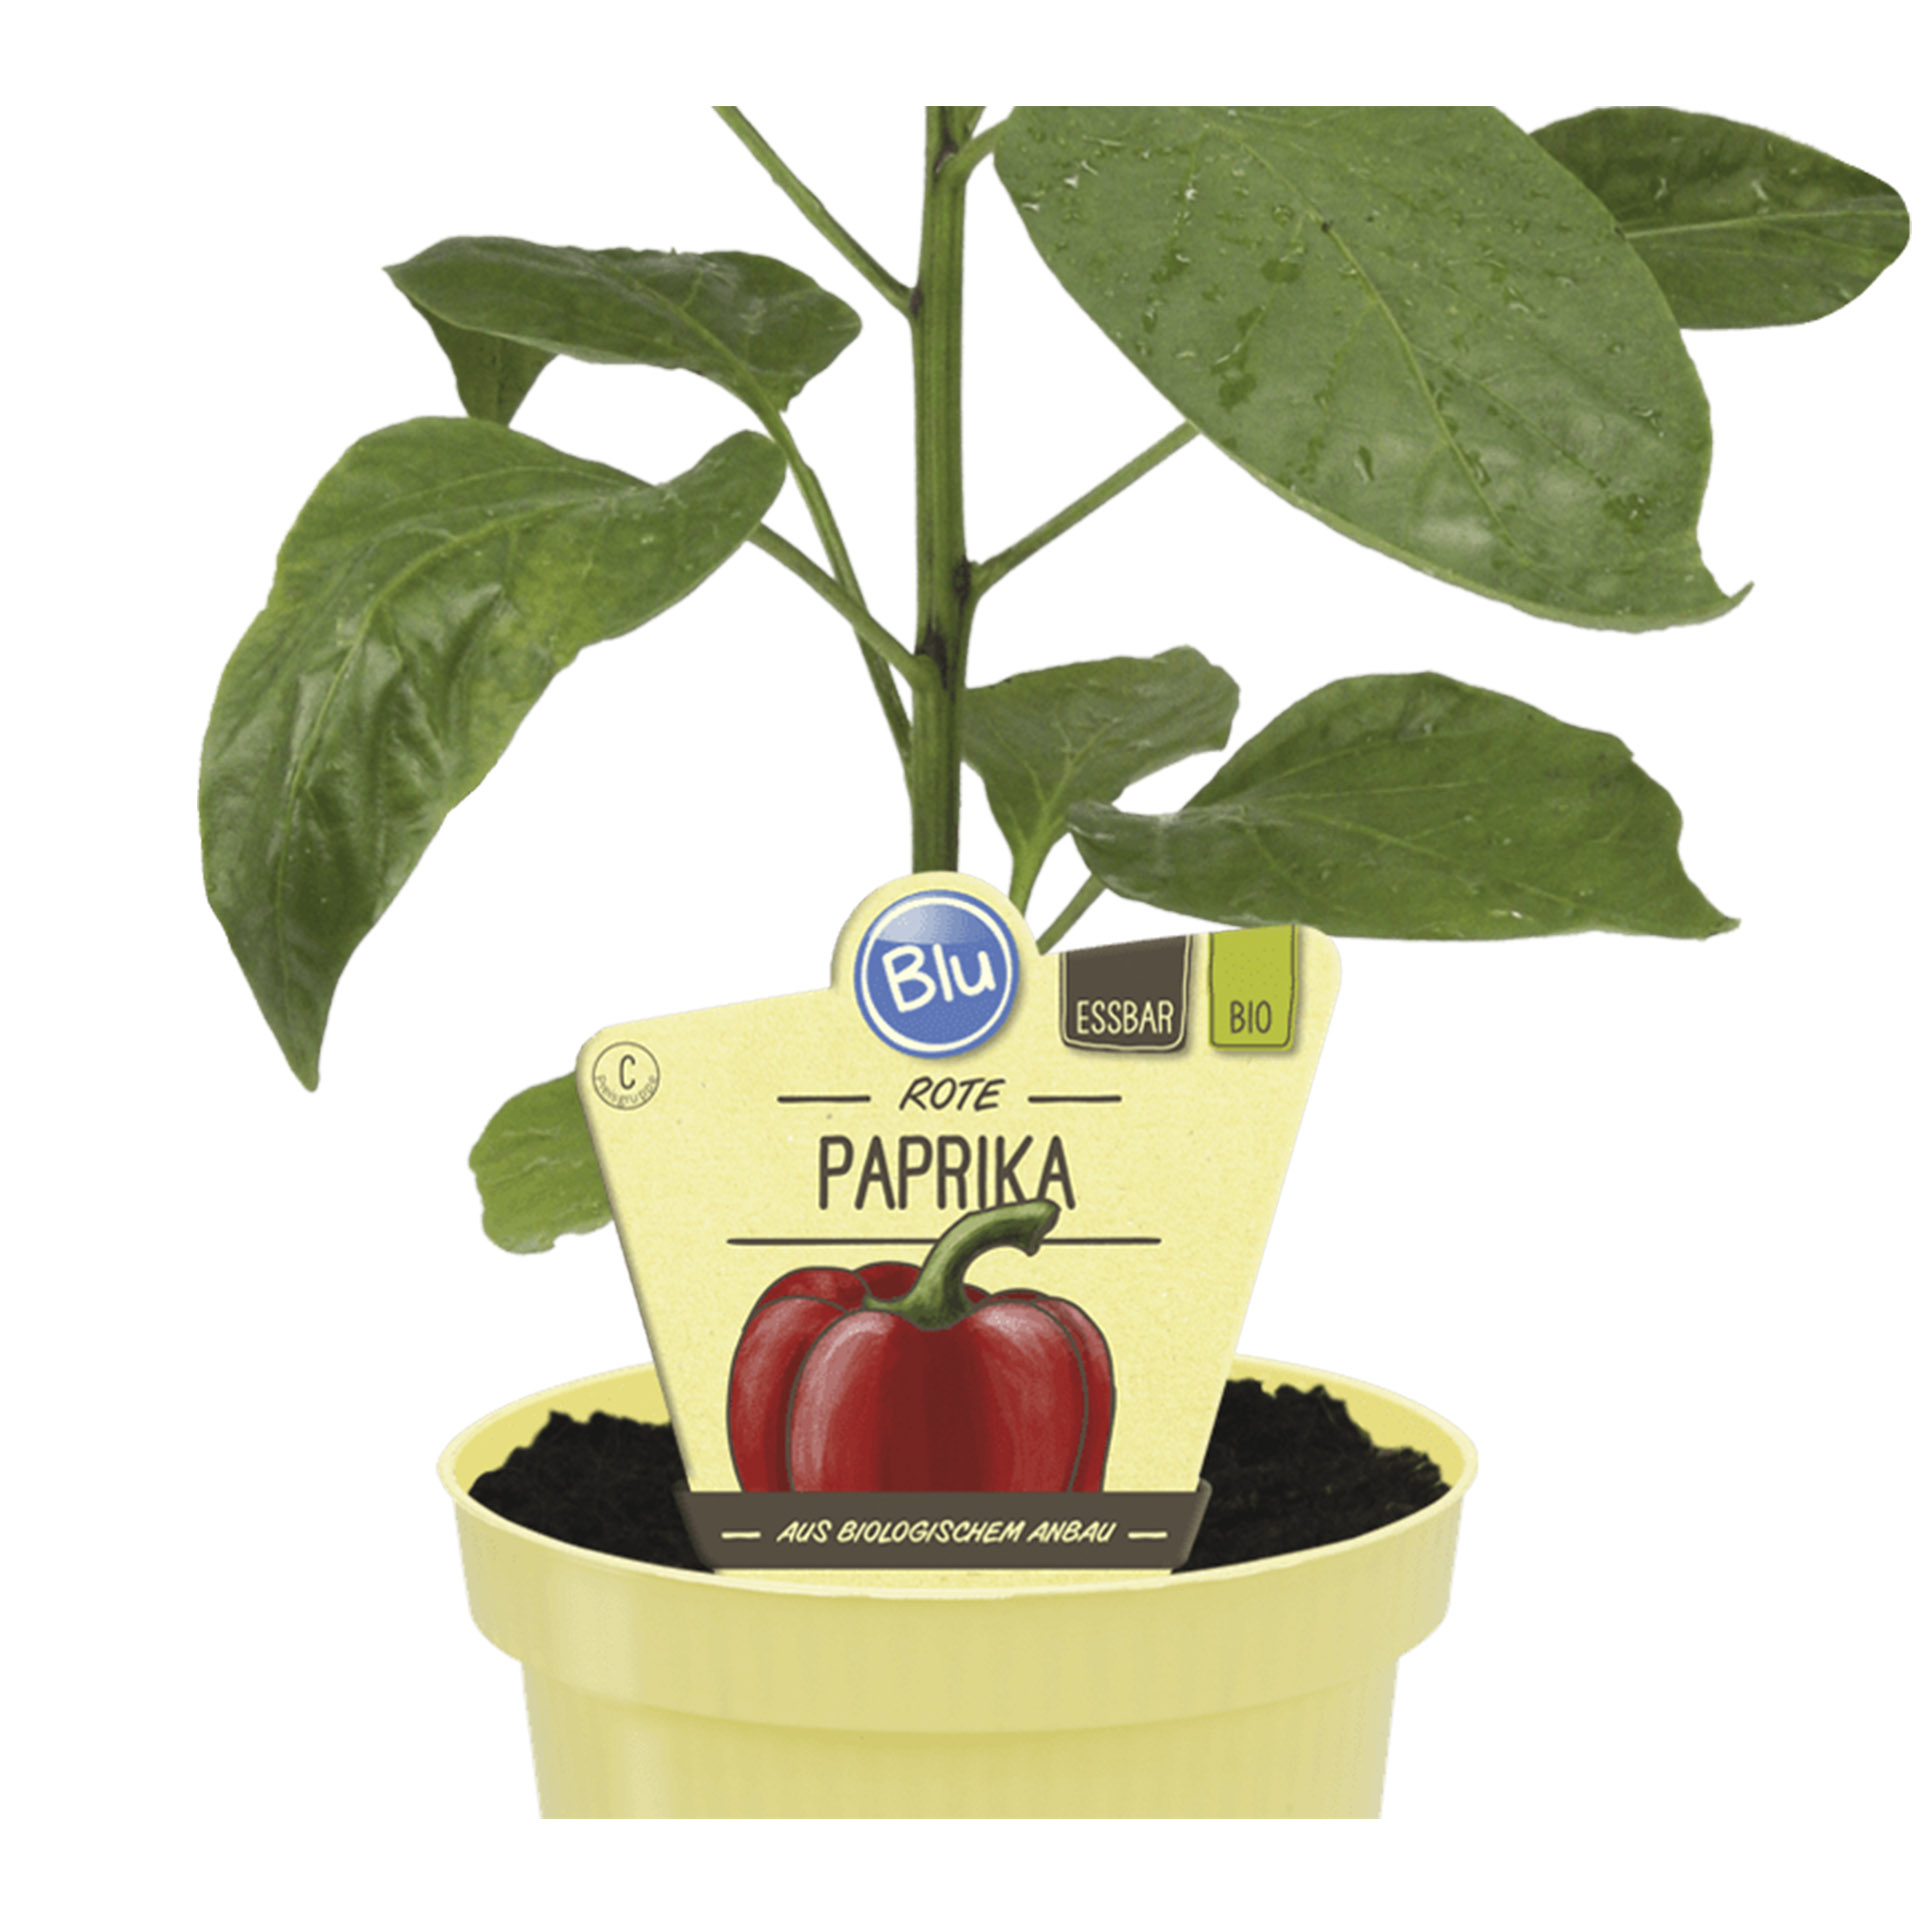 Rote BIO Paprika im Pflanztopf mit Pflanzenstecker